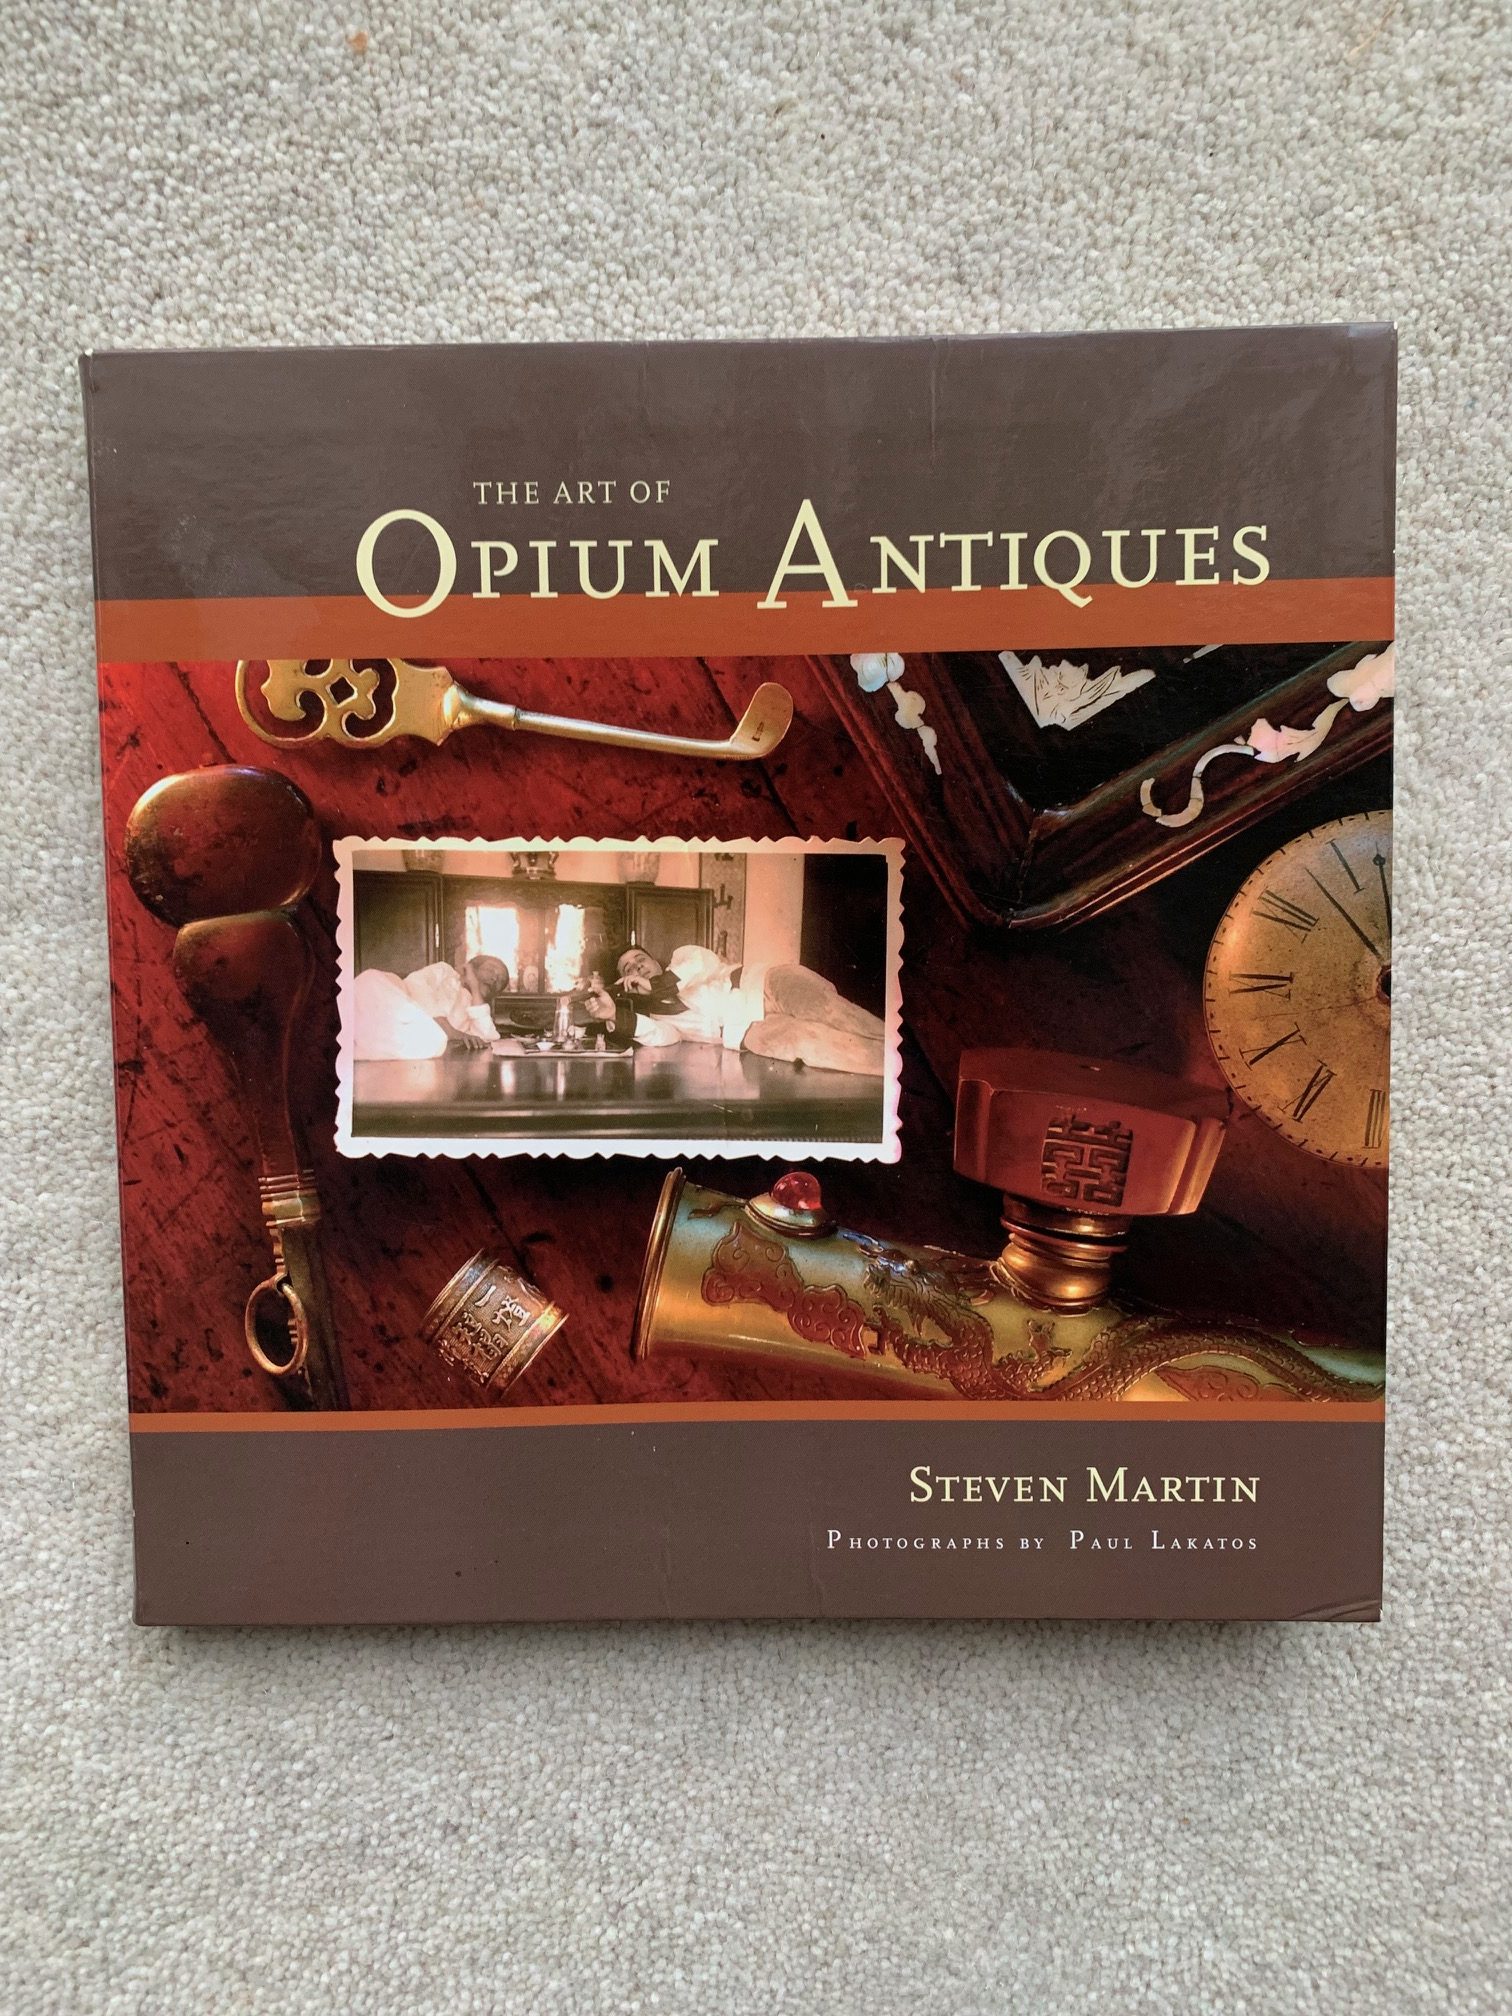 The Art of Opium Antiques - Steve Martin Image